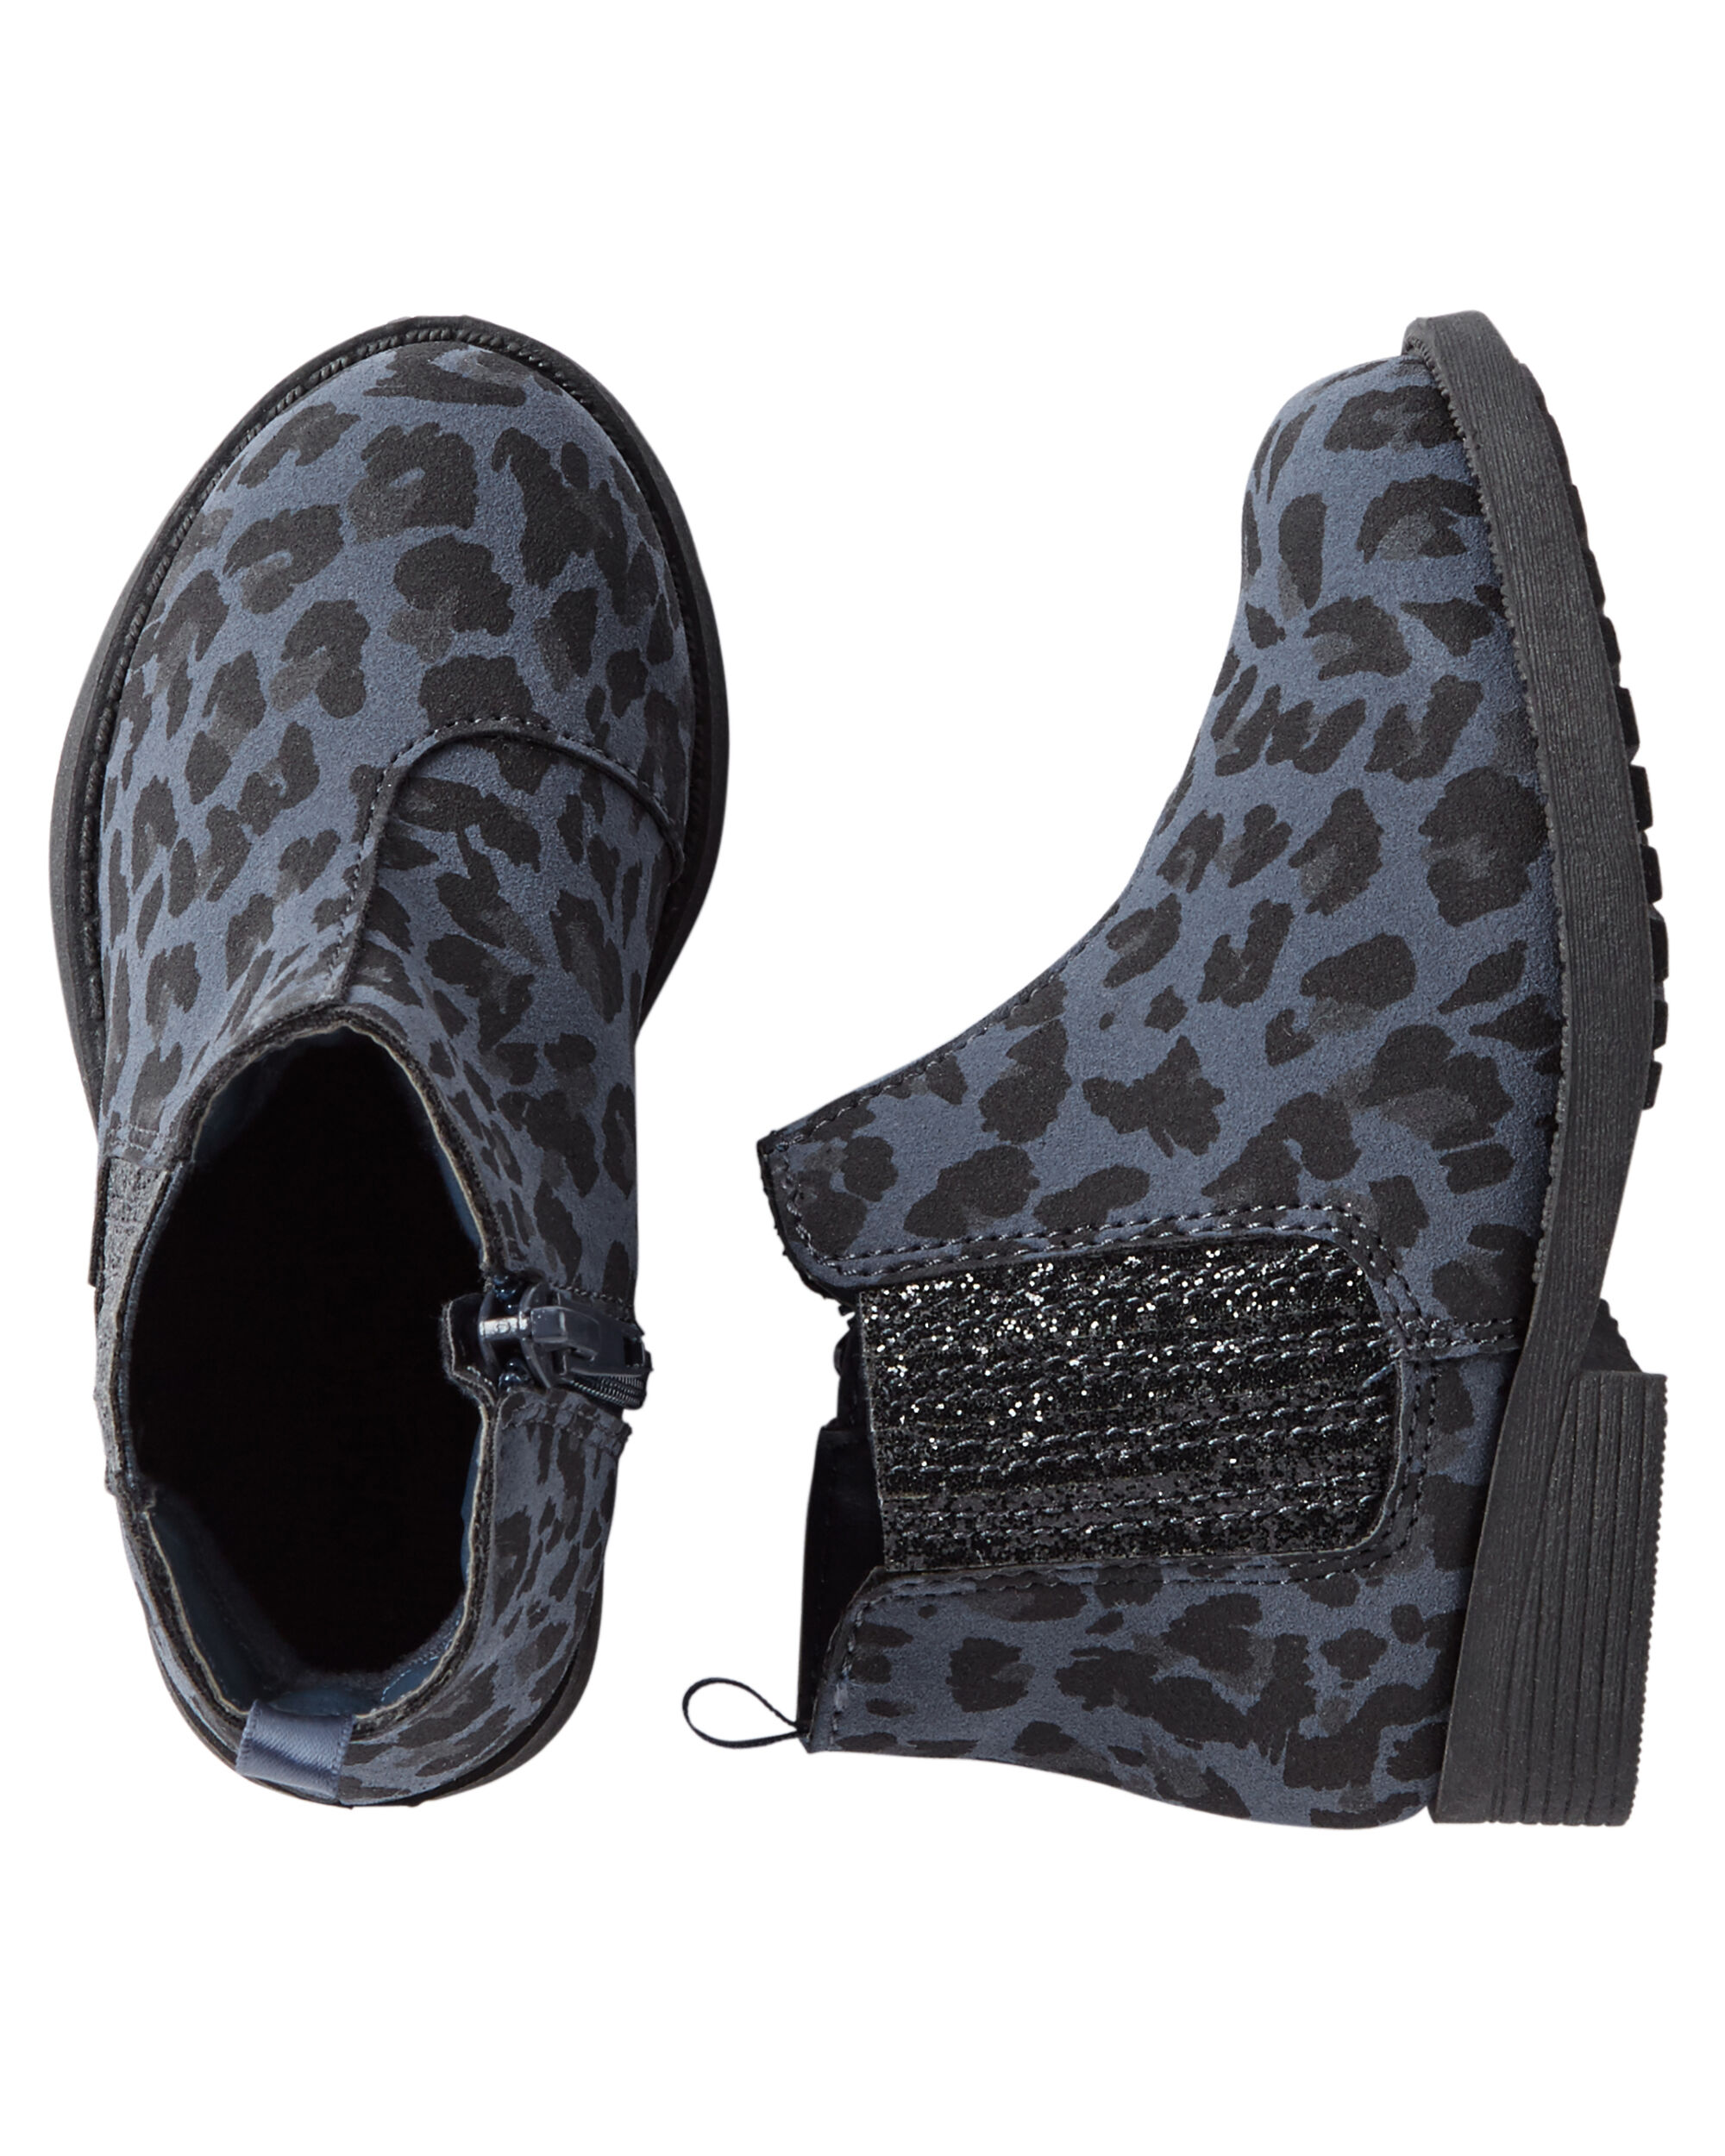 carter's leopard boots